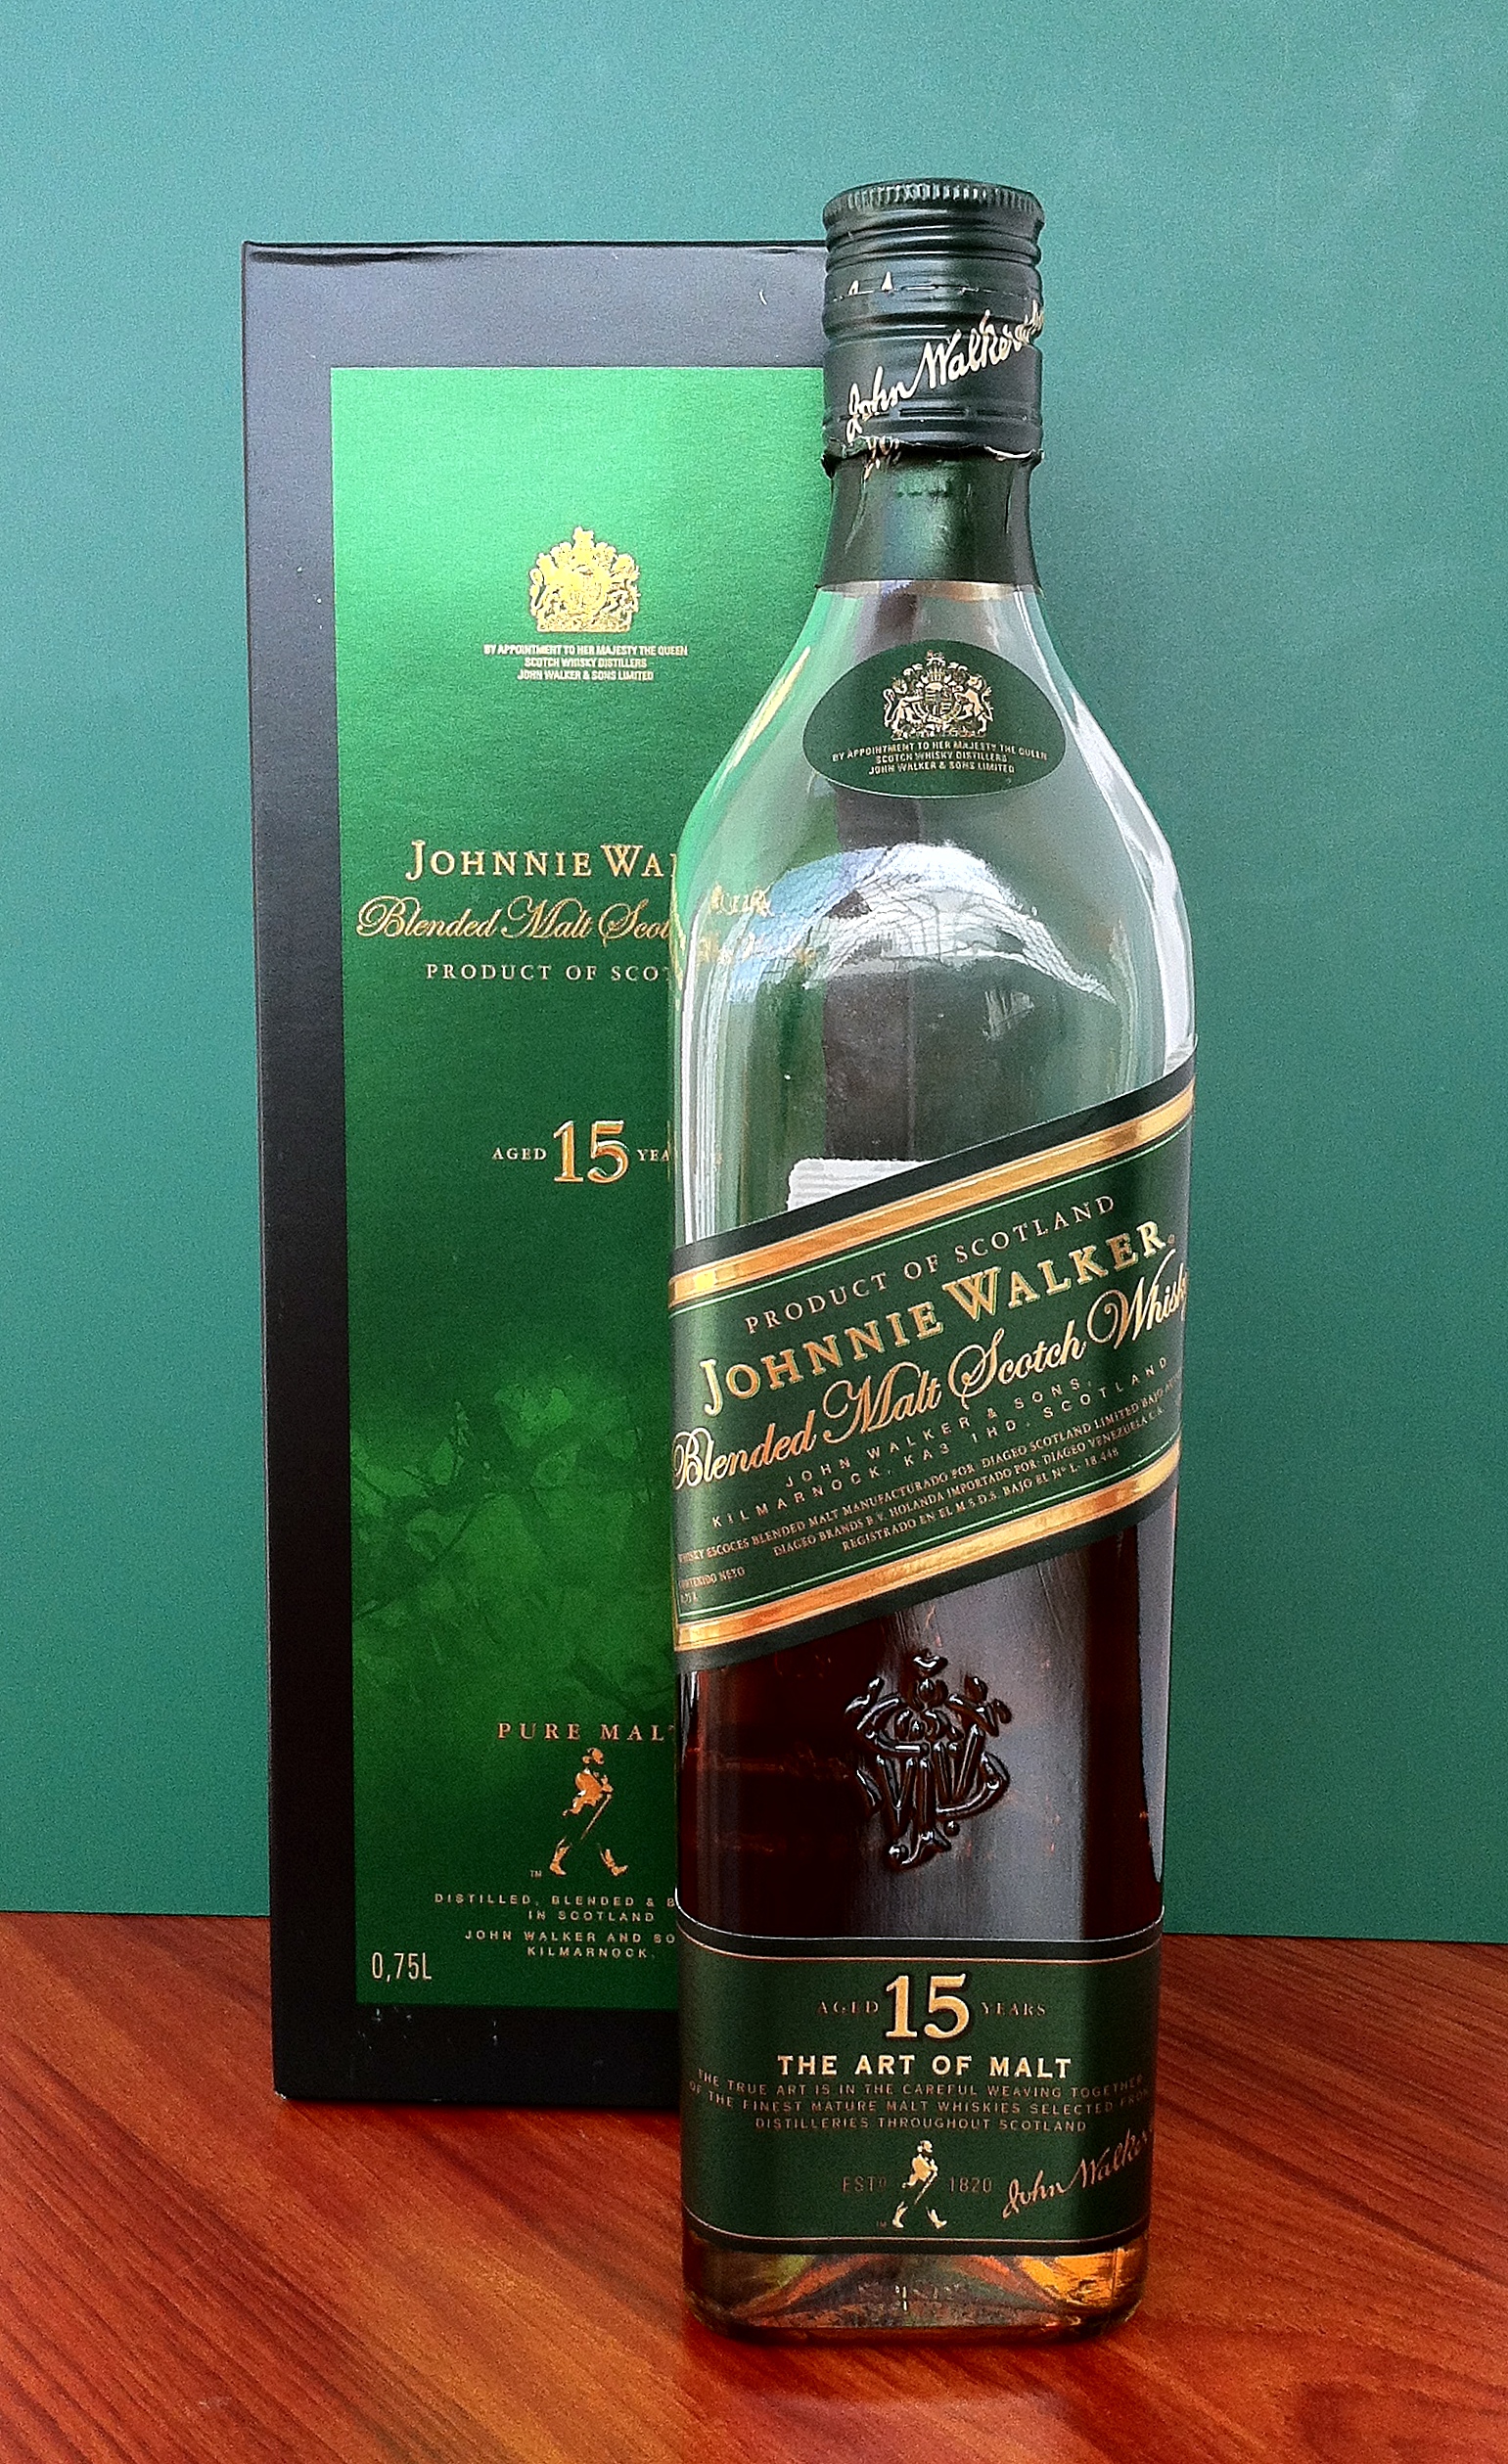 Johnnie Walker Blended Malt Scotch Whisky Aged 15 Years